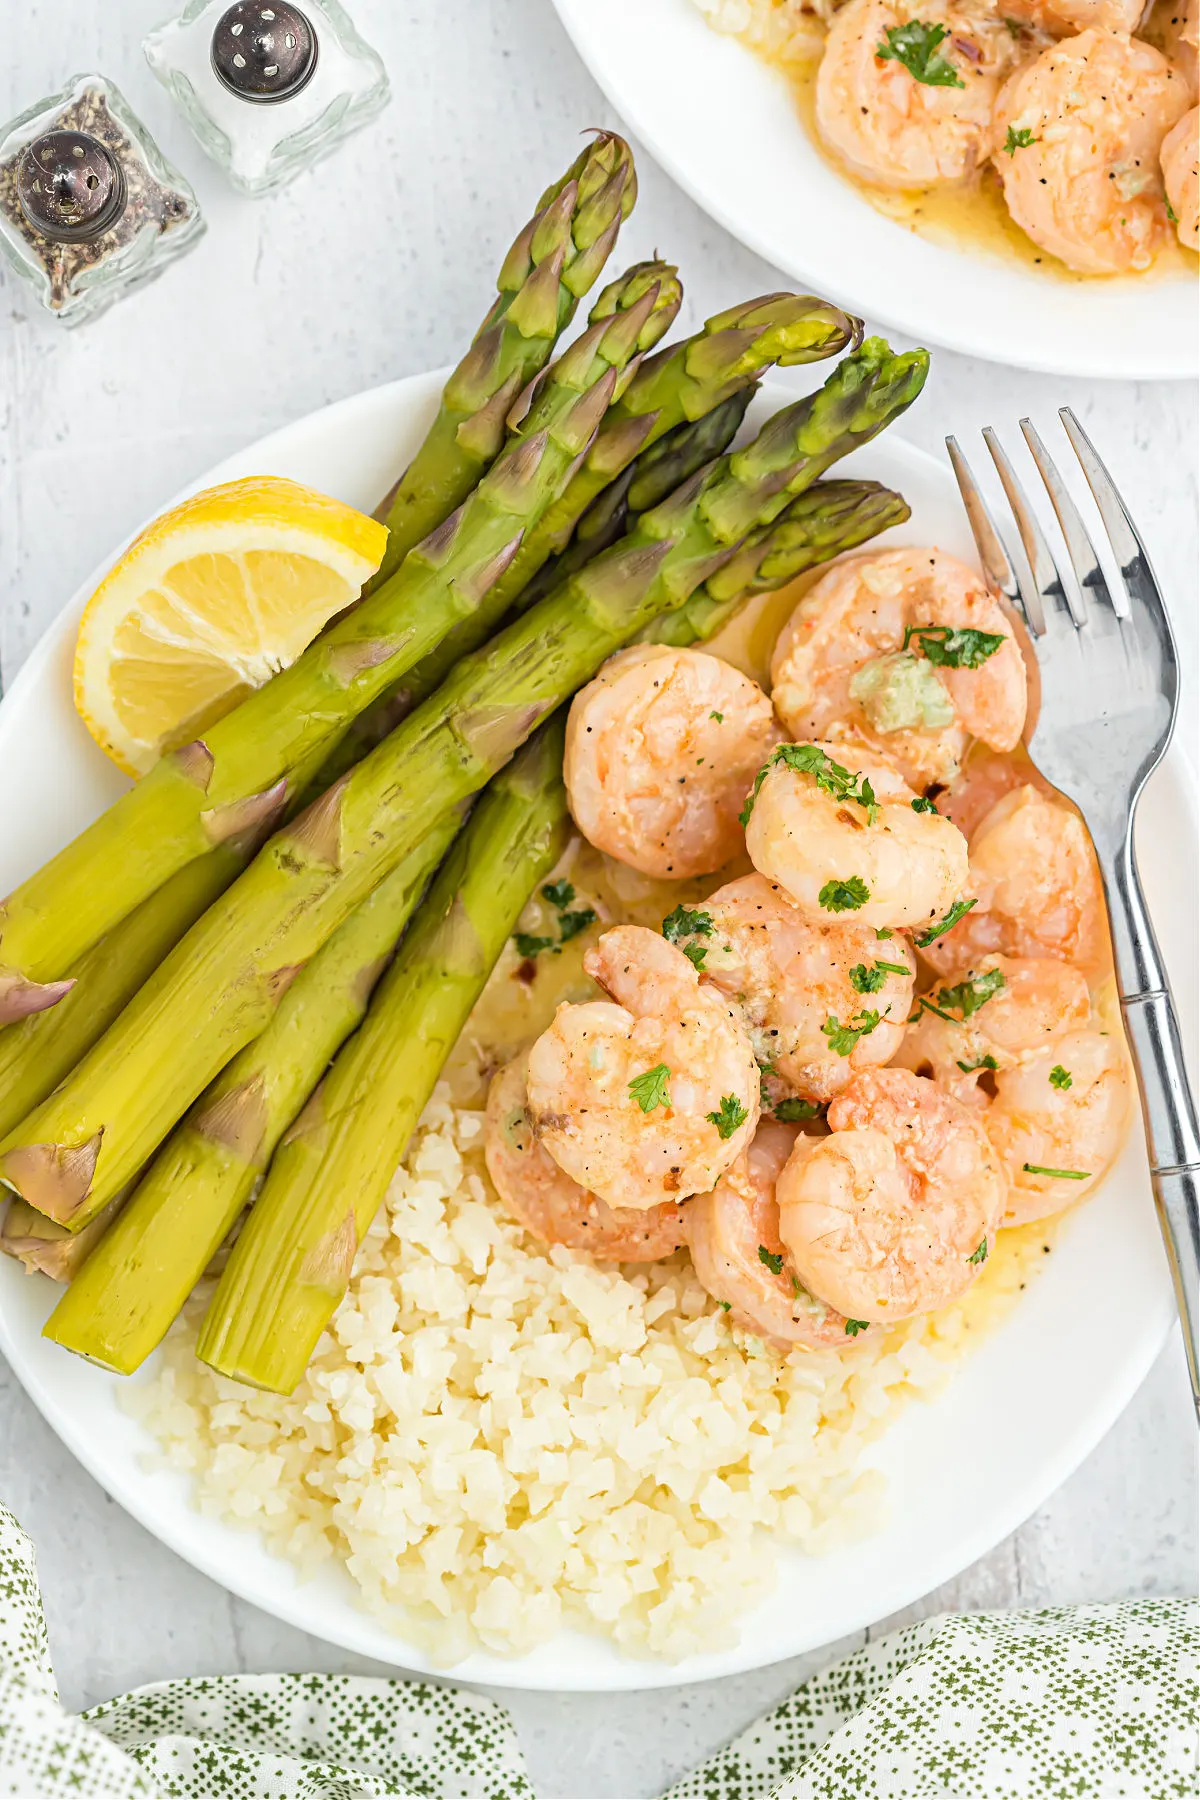 Shrimp served on a plate with asparagus and cauliflower rice.